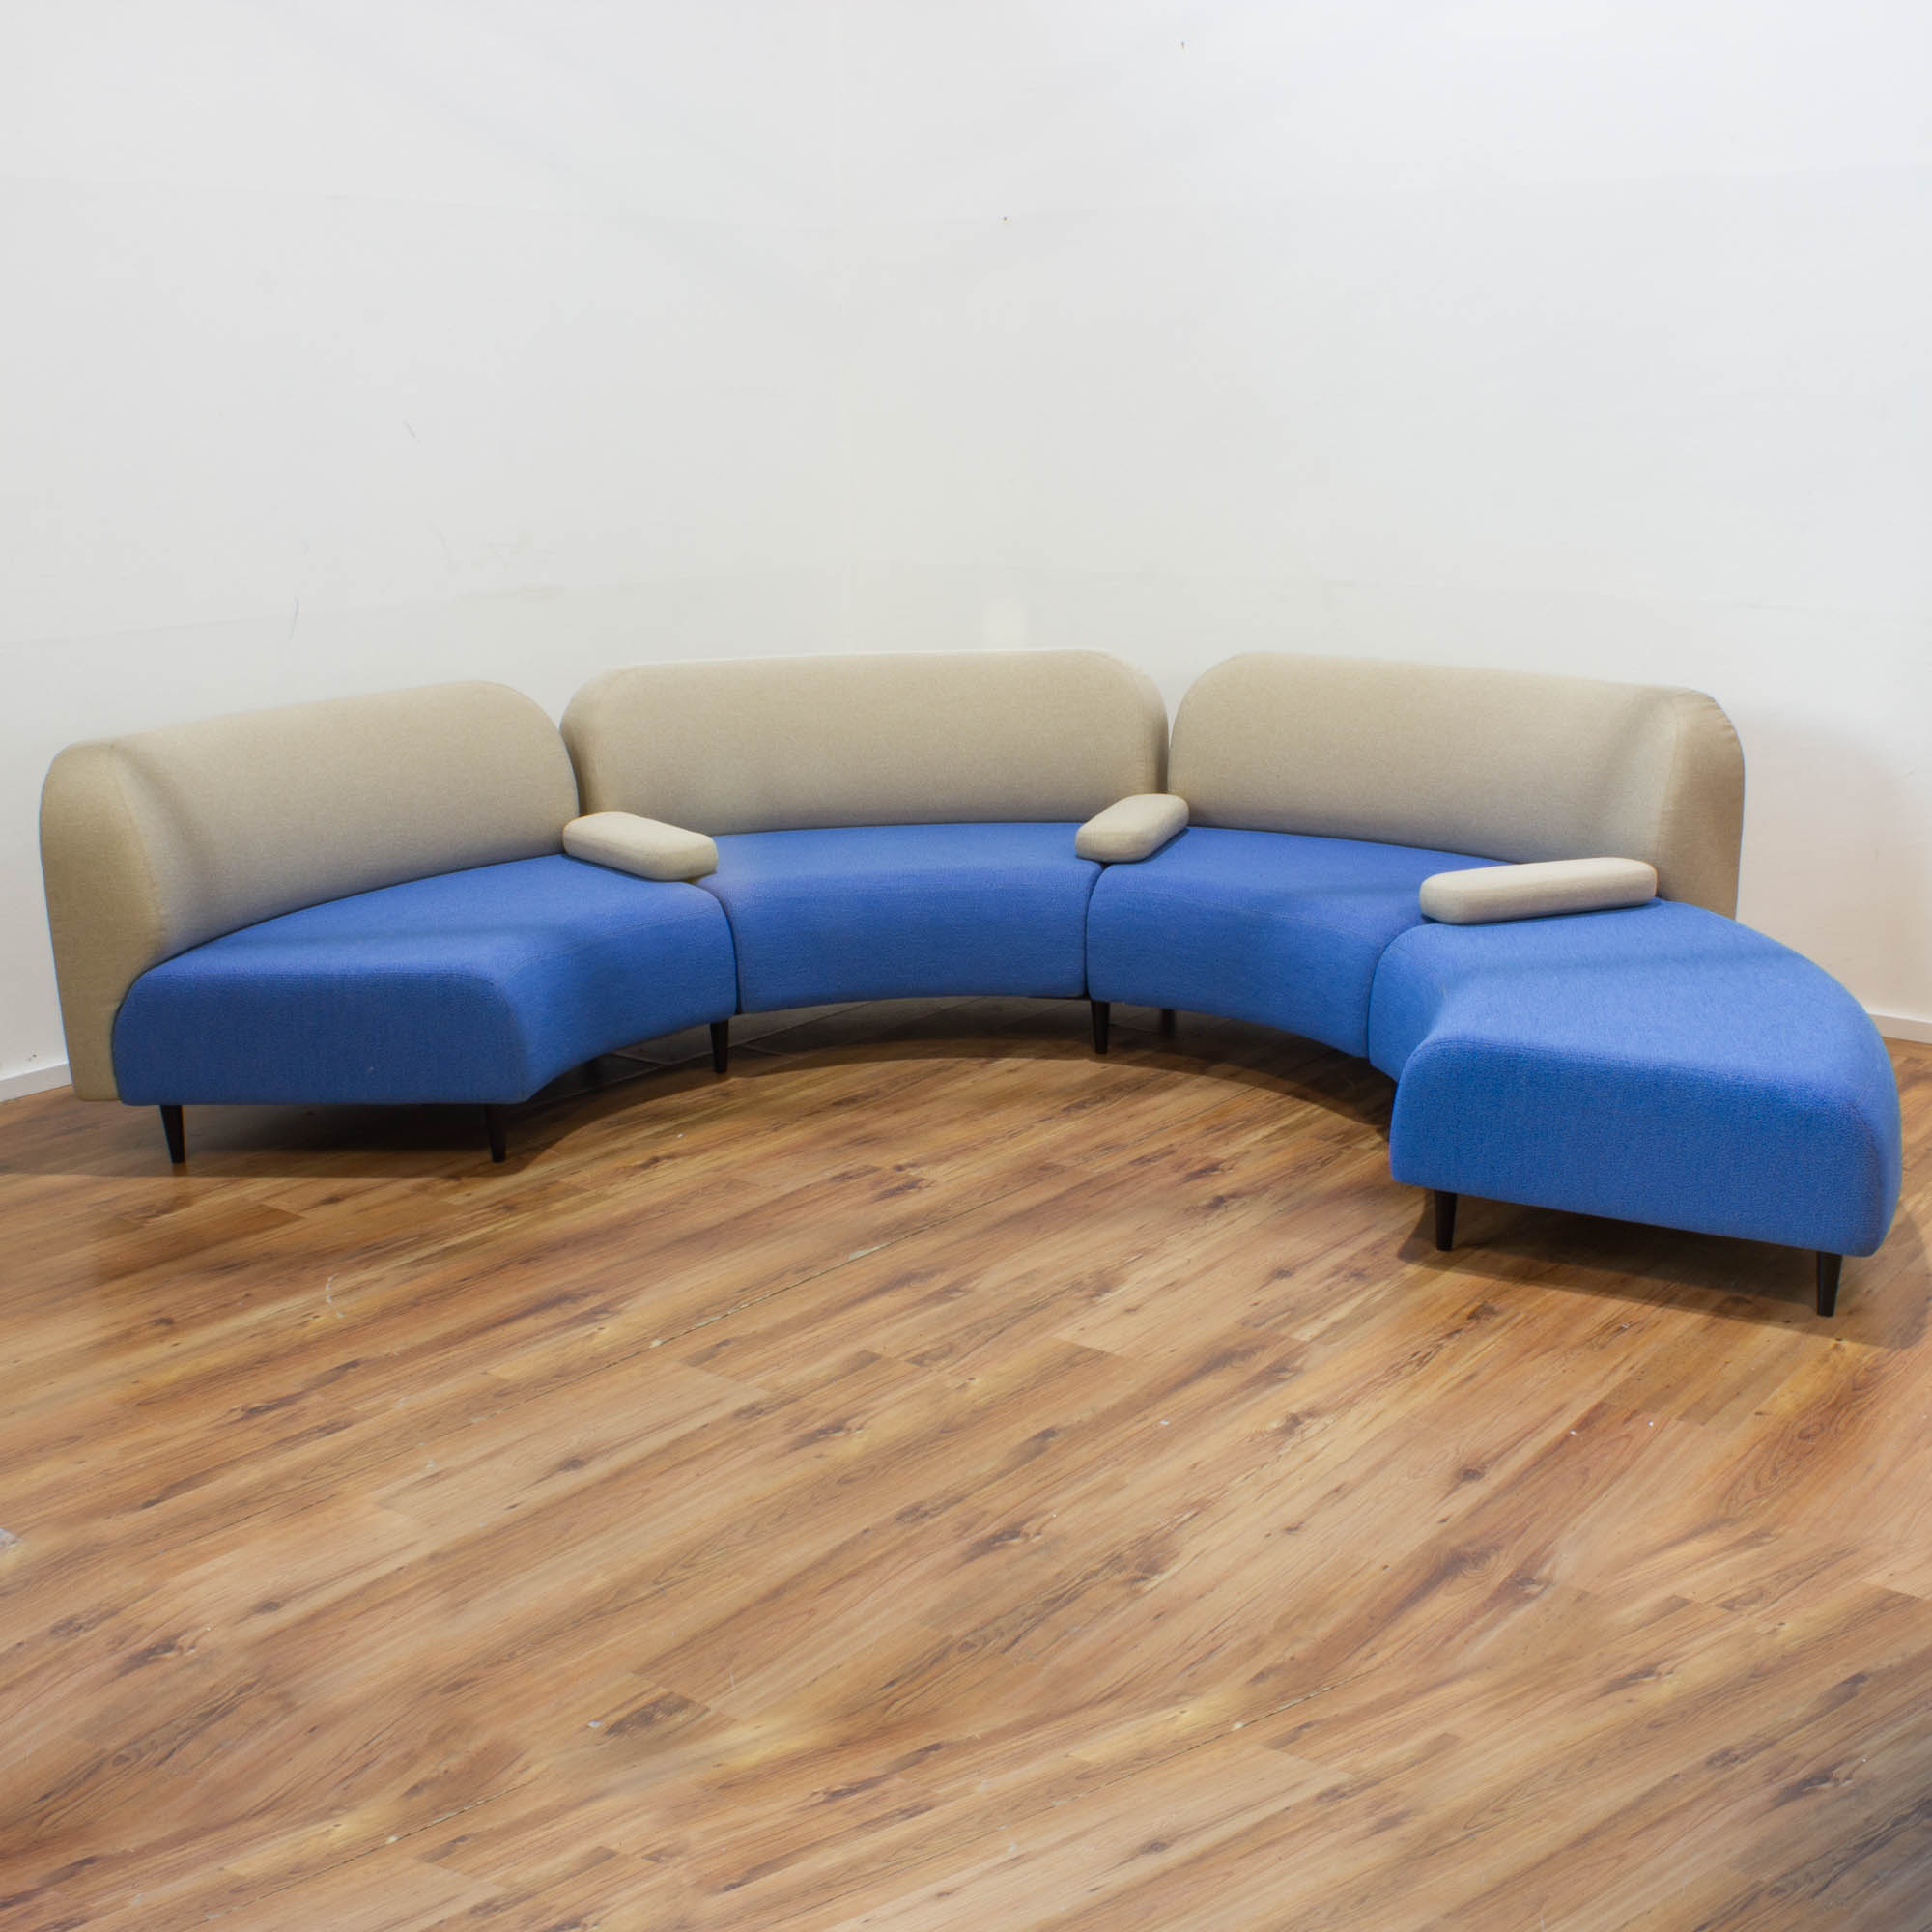 La Manufacture  du Design - Sofa 4 teilig - Stoff blau - Rückenlehne beige